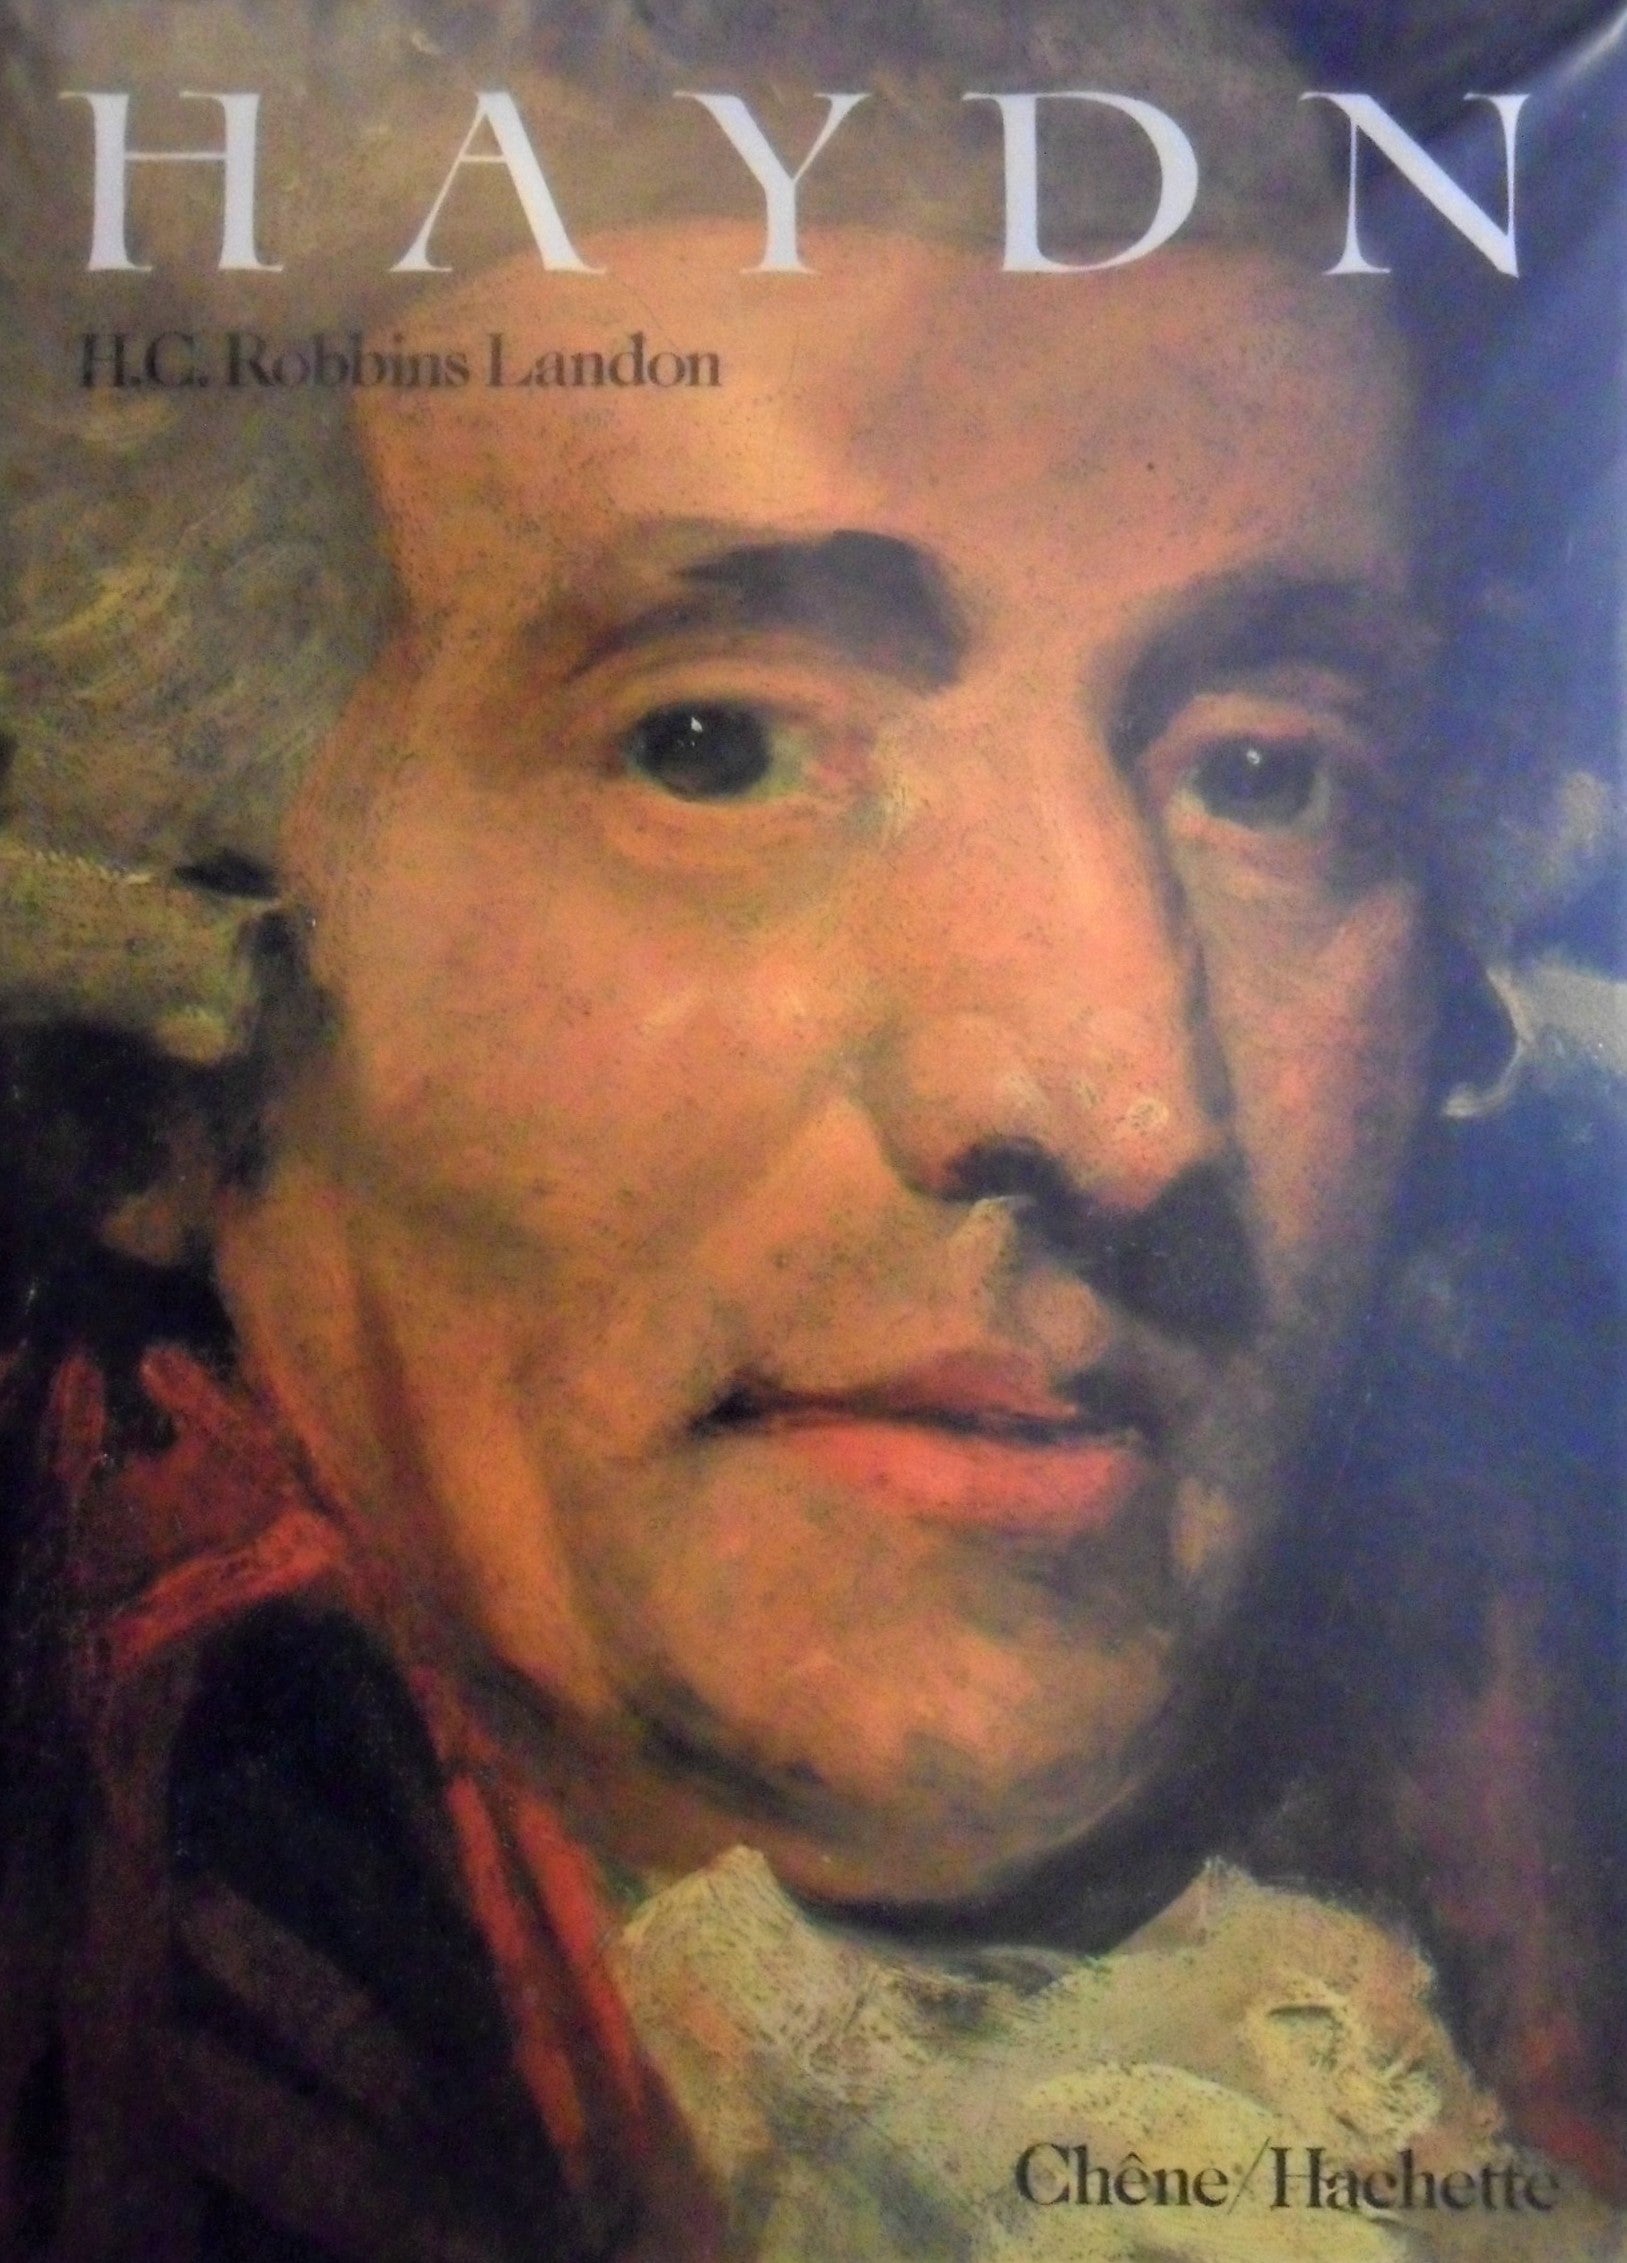 Livre ISBN 2851082957 Haydn (H.C. Robbins Landon)